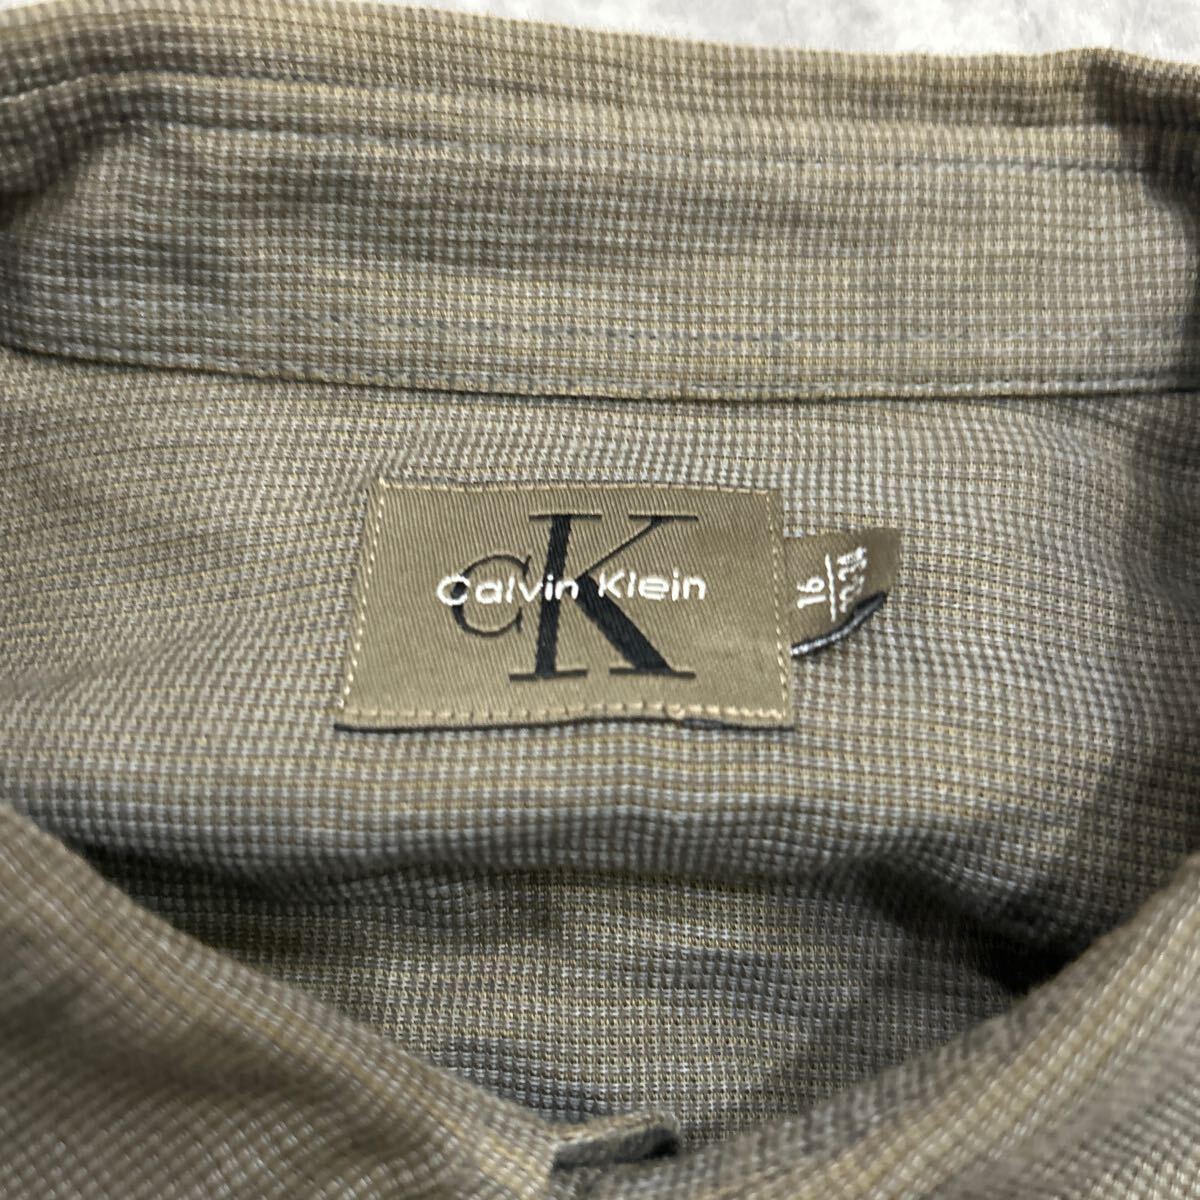 Y @ 日本製 '高級感溢れる' CK Calvin Klein カルバンクライン 長袖 COTTON ボタンシャツ size16 着心地抜群 メンズ 紳士服 トップス 古着_画像6